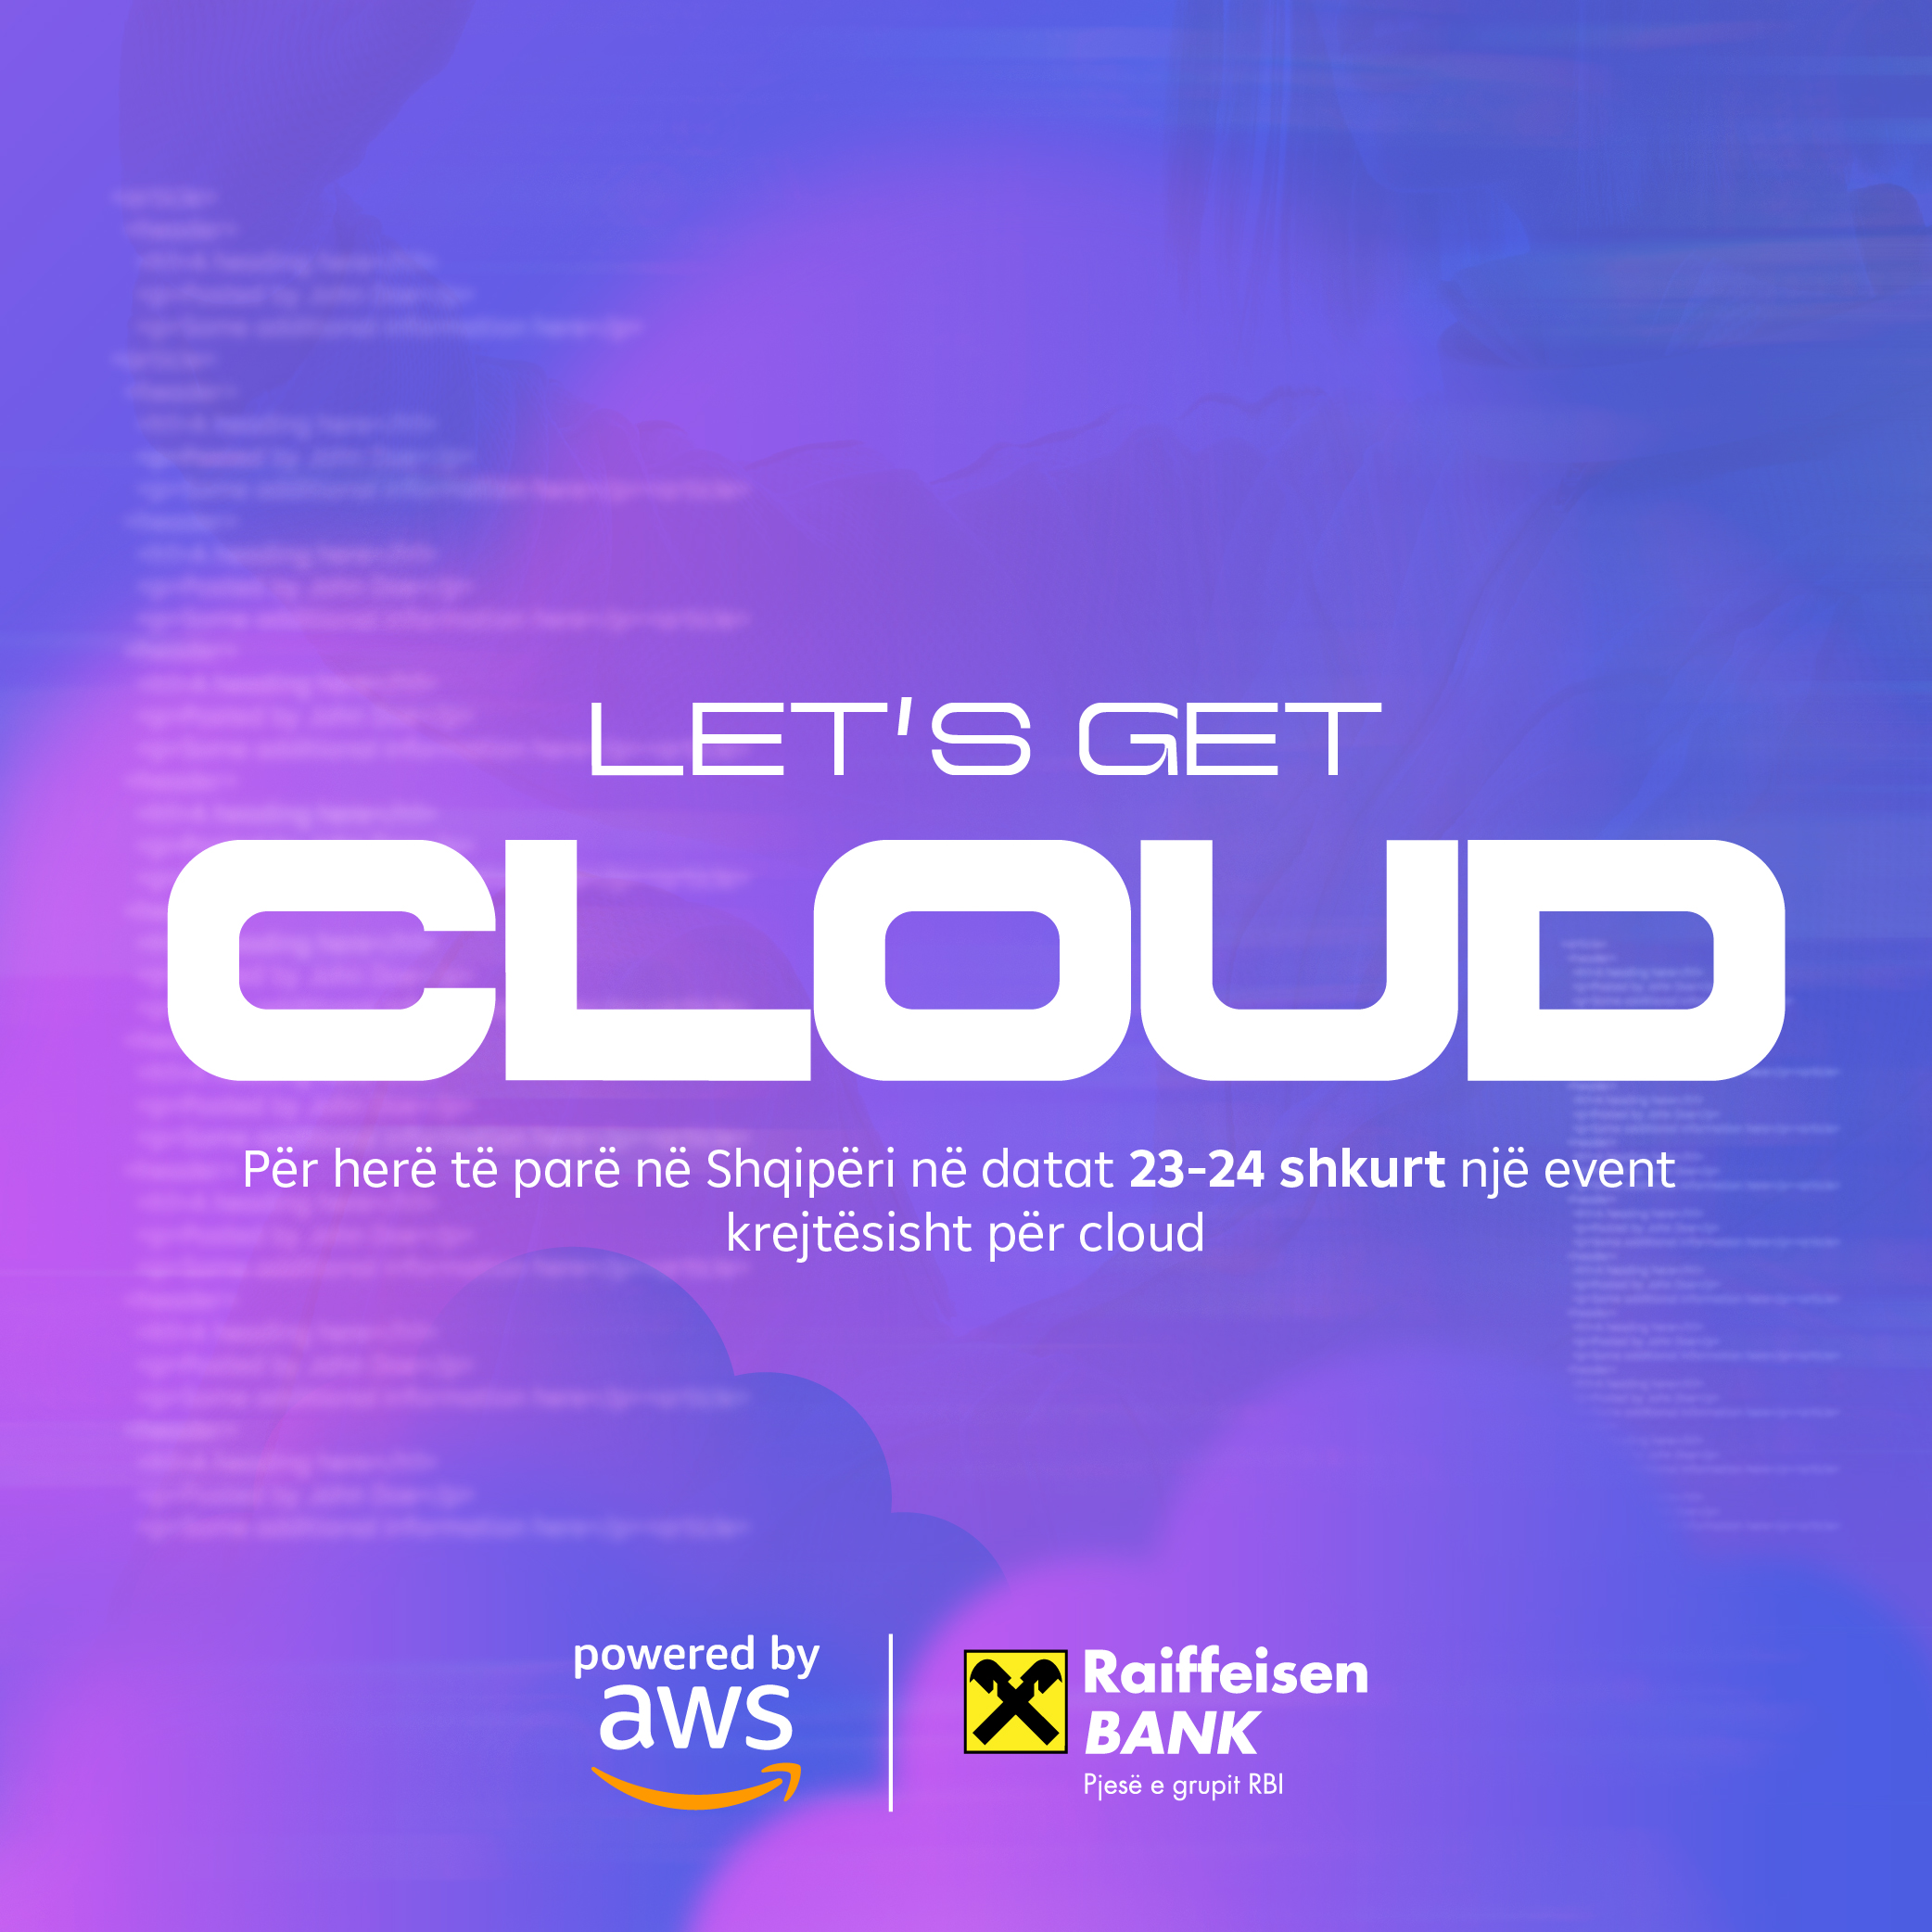 Let's get Cloud